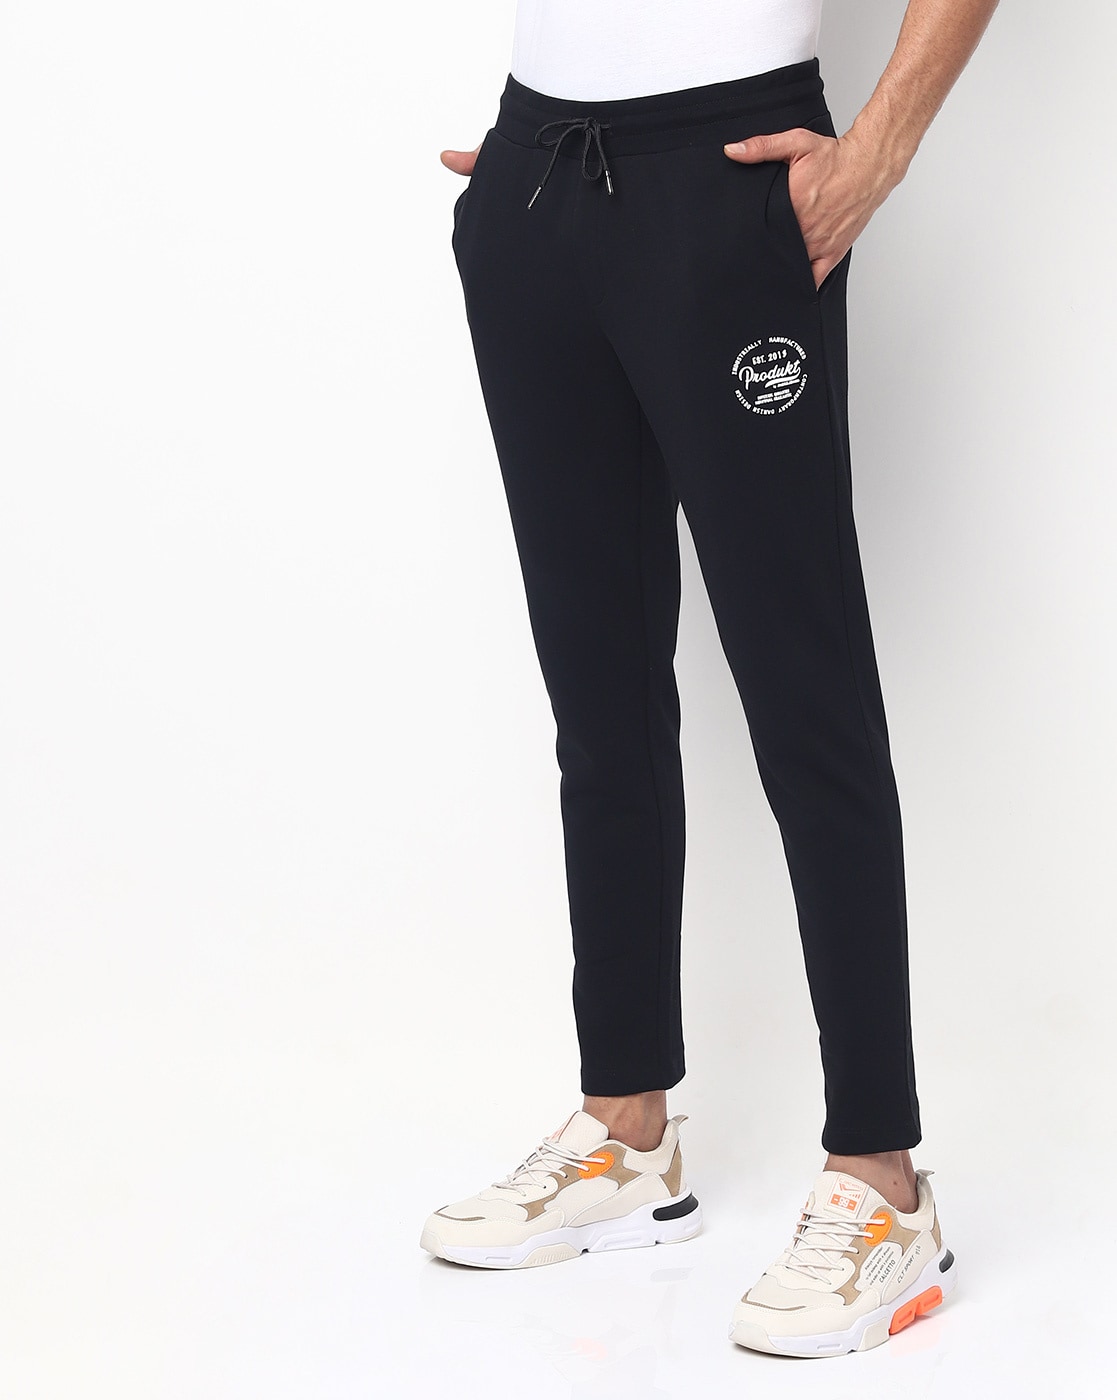 Jack & Jones Mens Glenn Slim-Fit Jeans Denim Stretchy Pants New Faded  Trousers | eBay